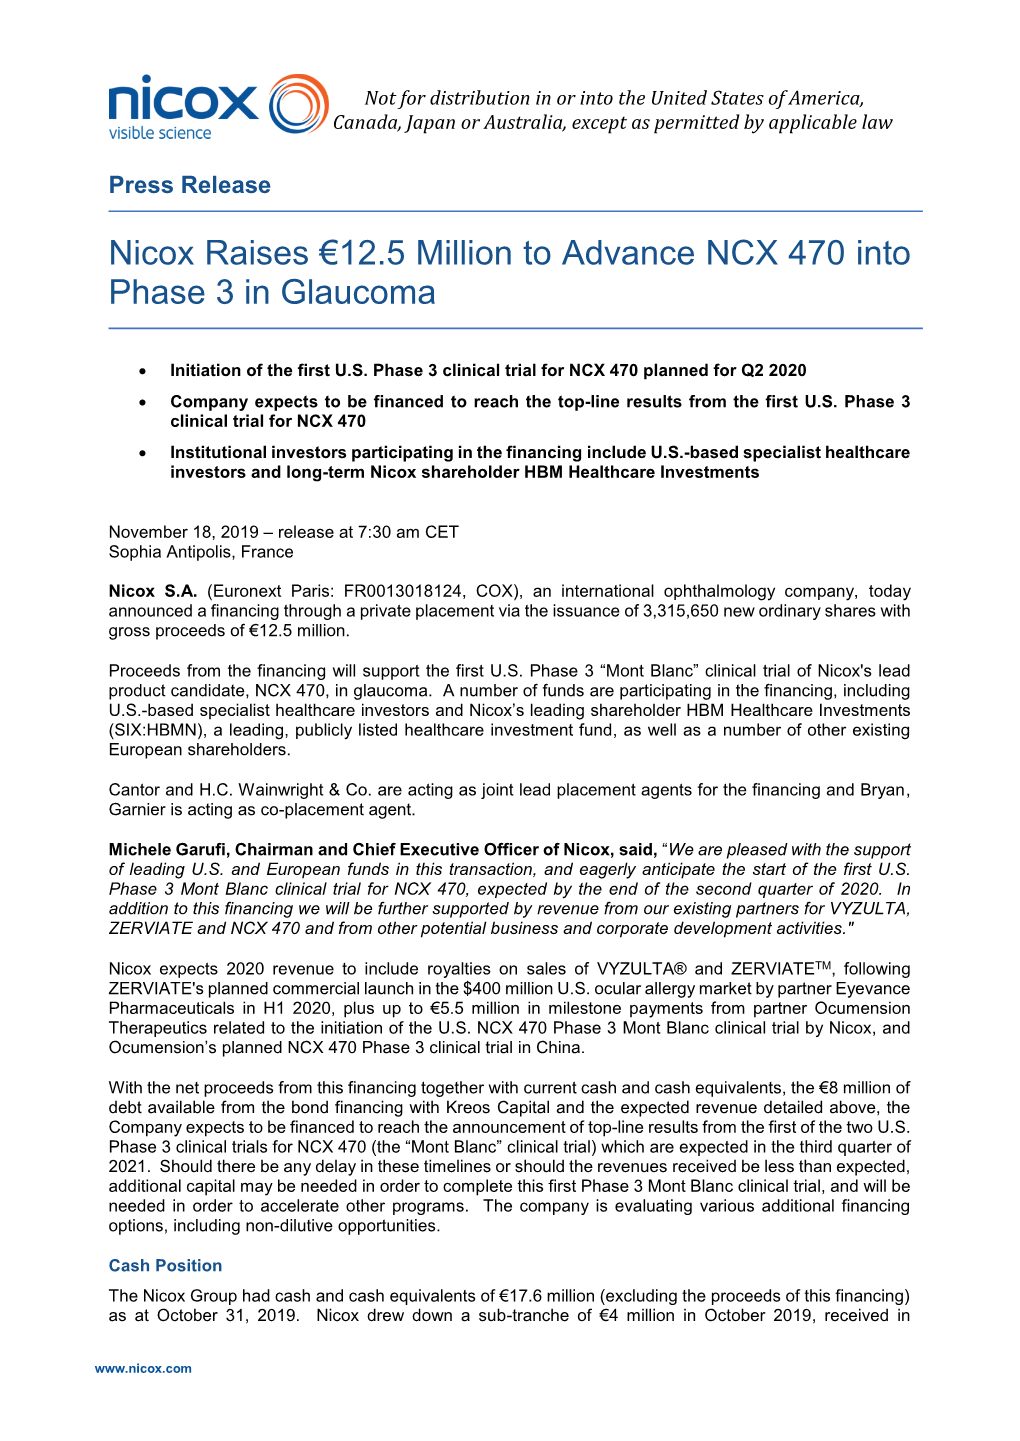 Nicox Raises €12.5 Million to Advance NCX 470 Into Phase 3 in Glaucoma